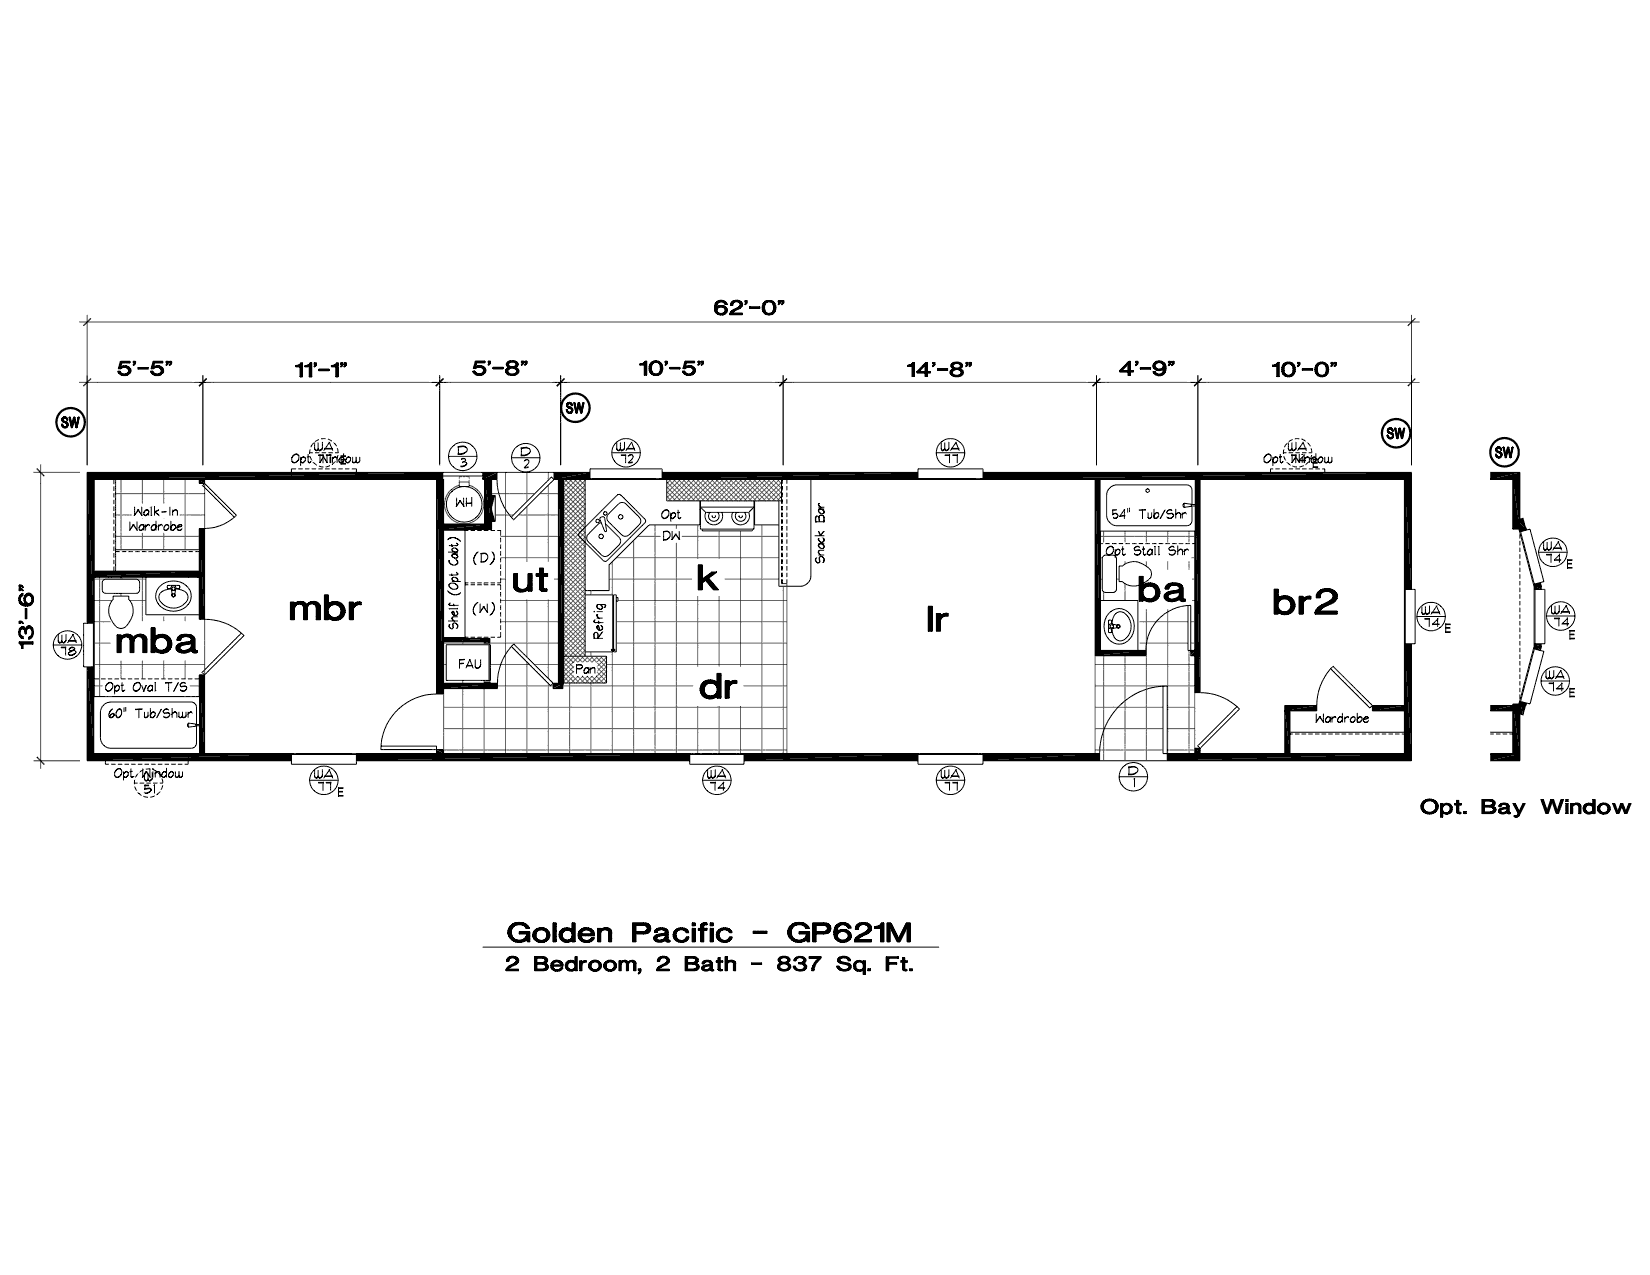 1995 Fleetwood Manufactured Home Floor Plans